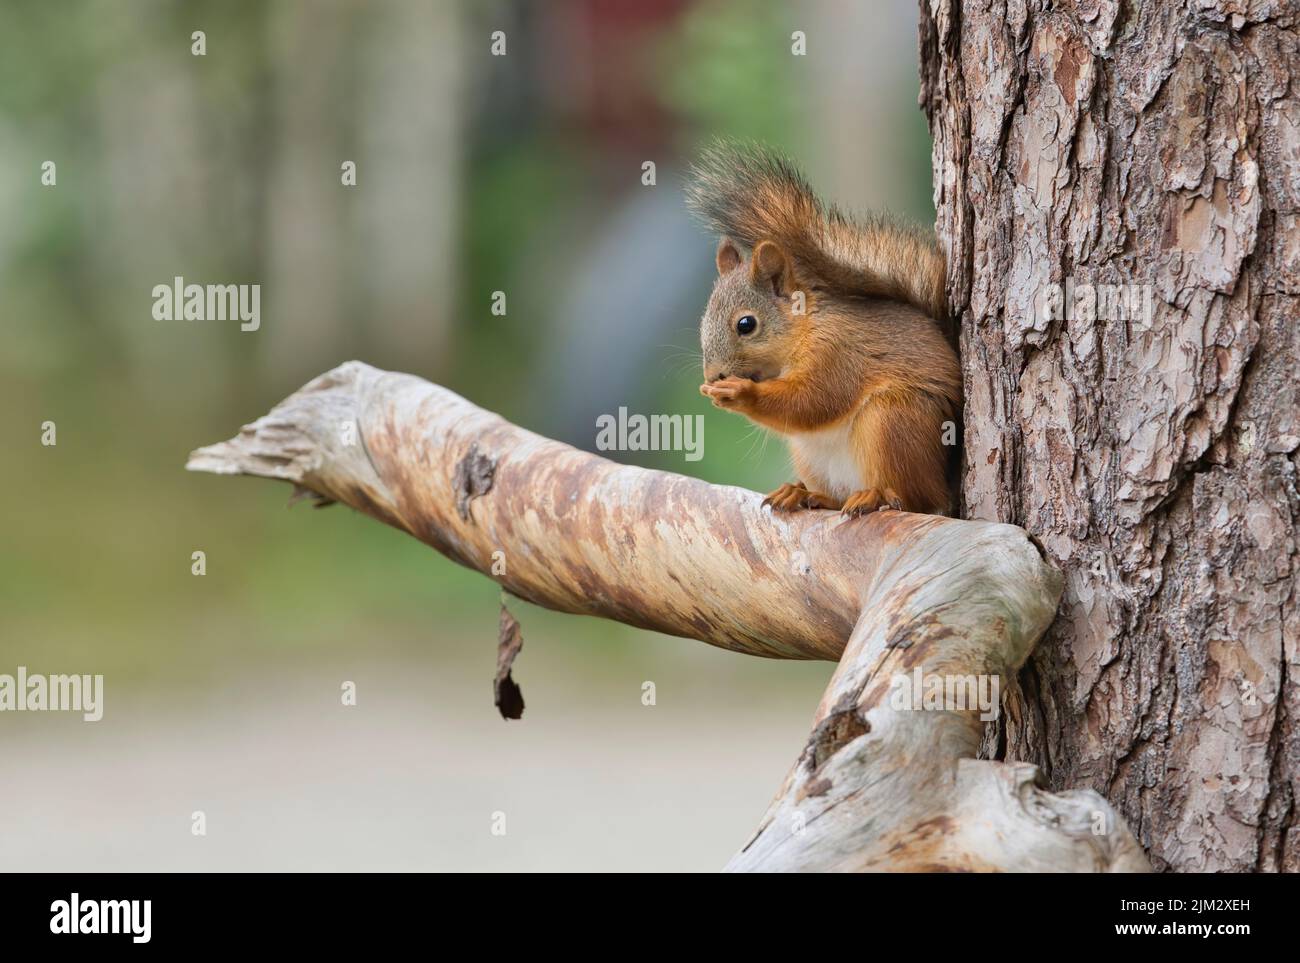 Red squirrel (Sciurus vulgaris) chewing food, Taiga forest, Finland Stock Photo